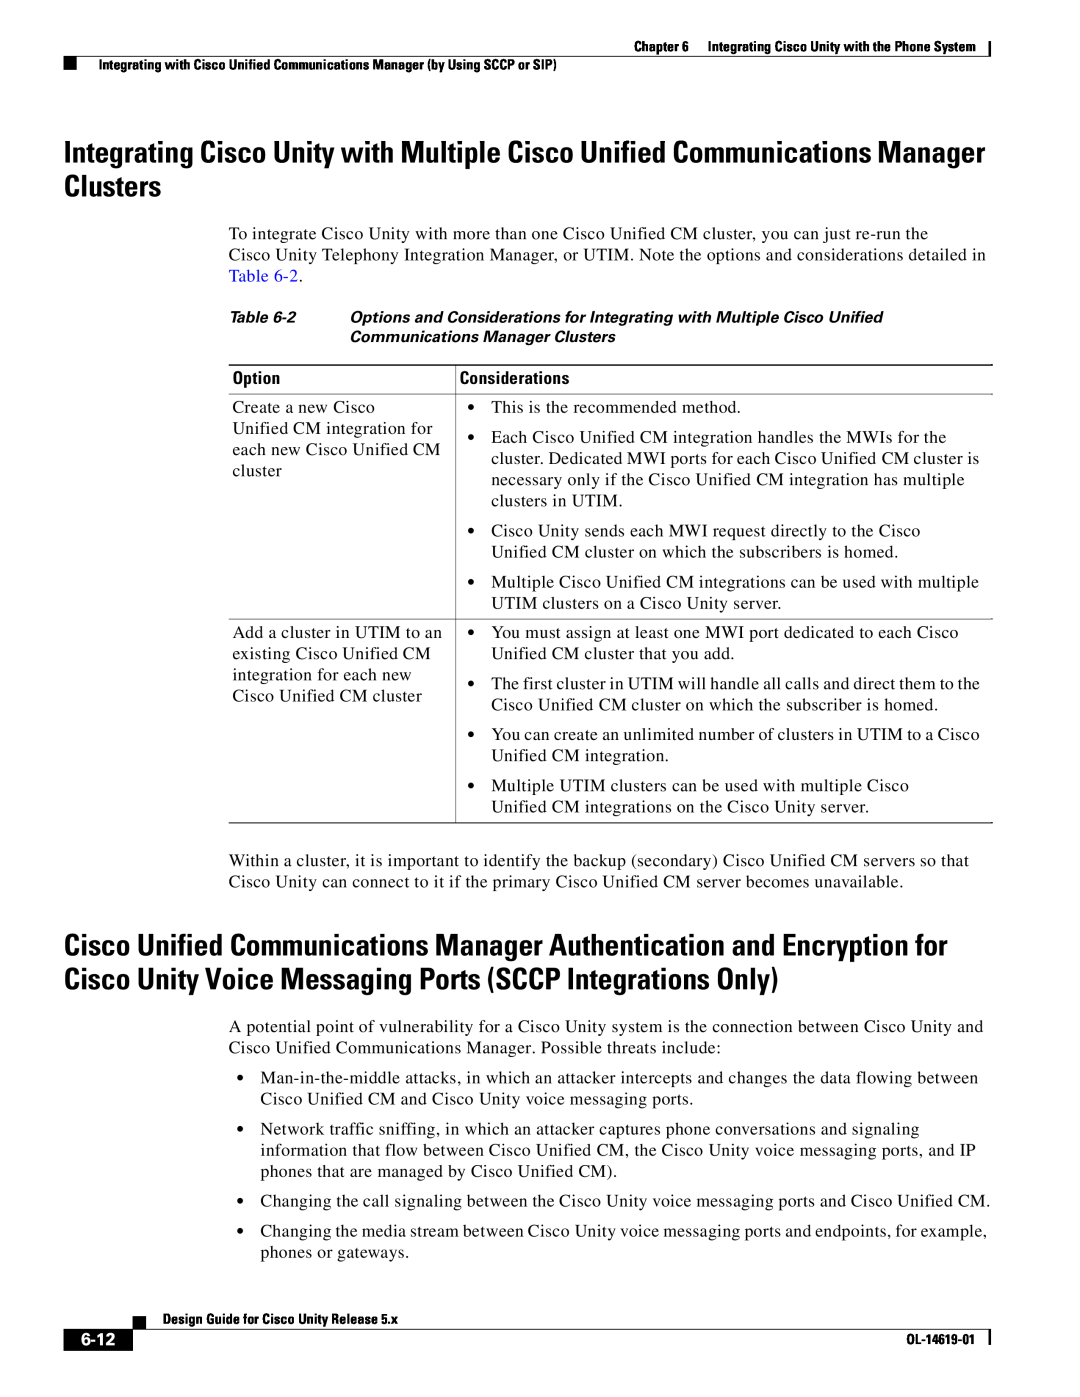 Cisco Systems OL-14619-01 manual Option, Considerations, 6-12 